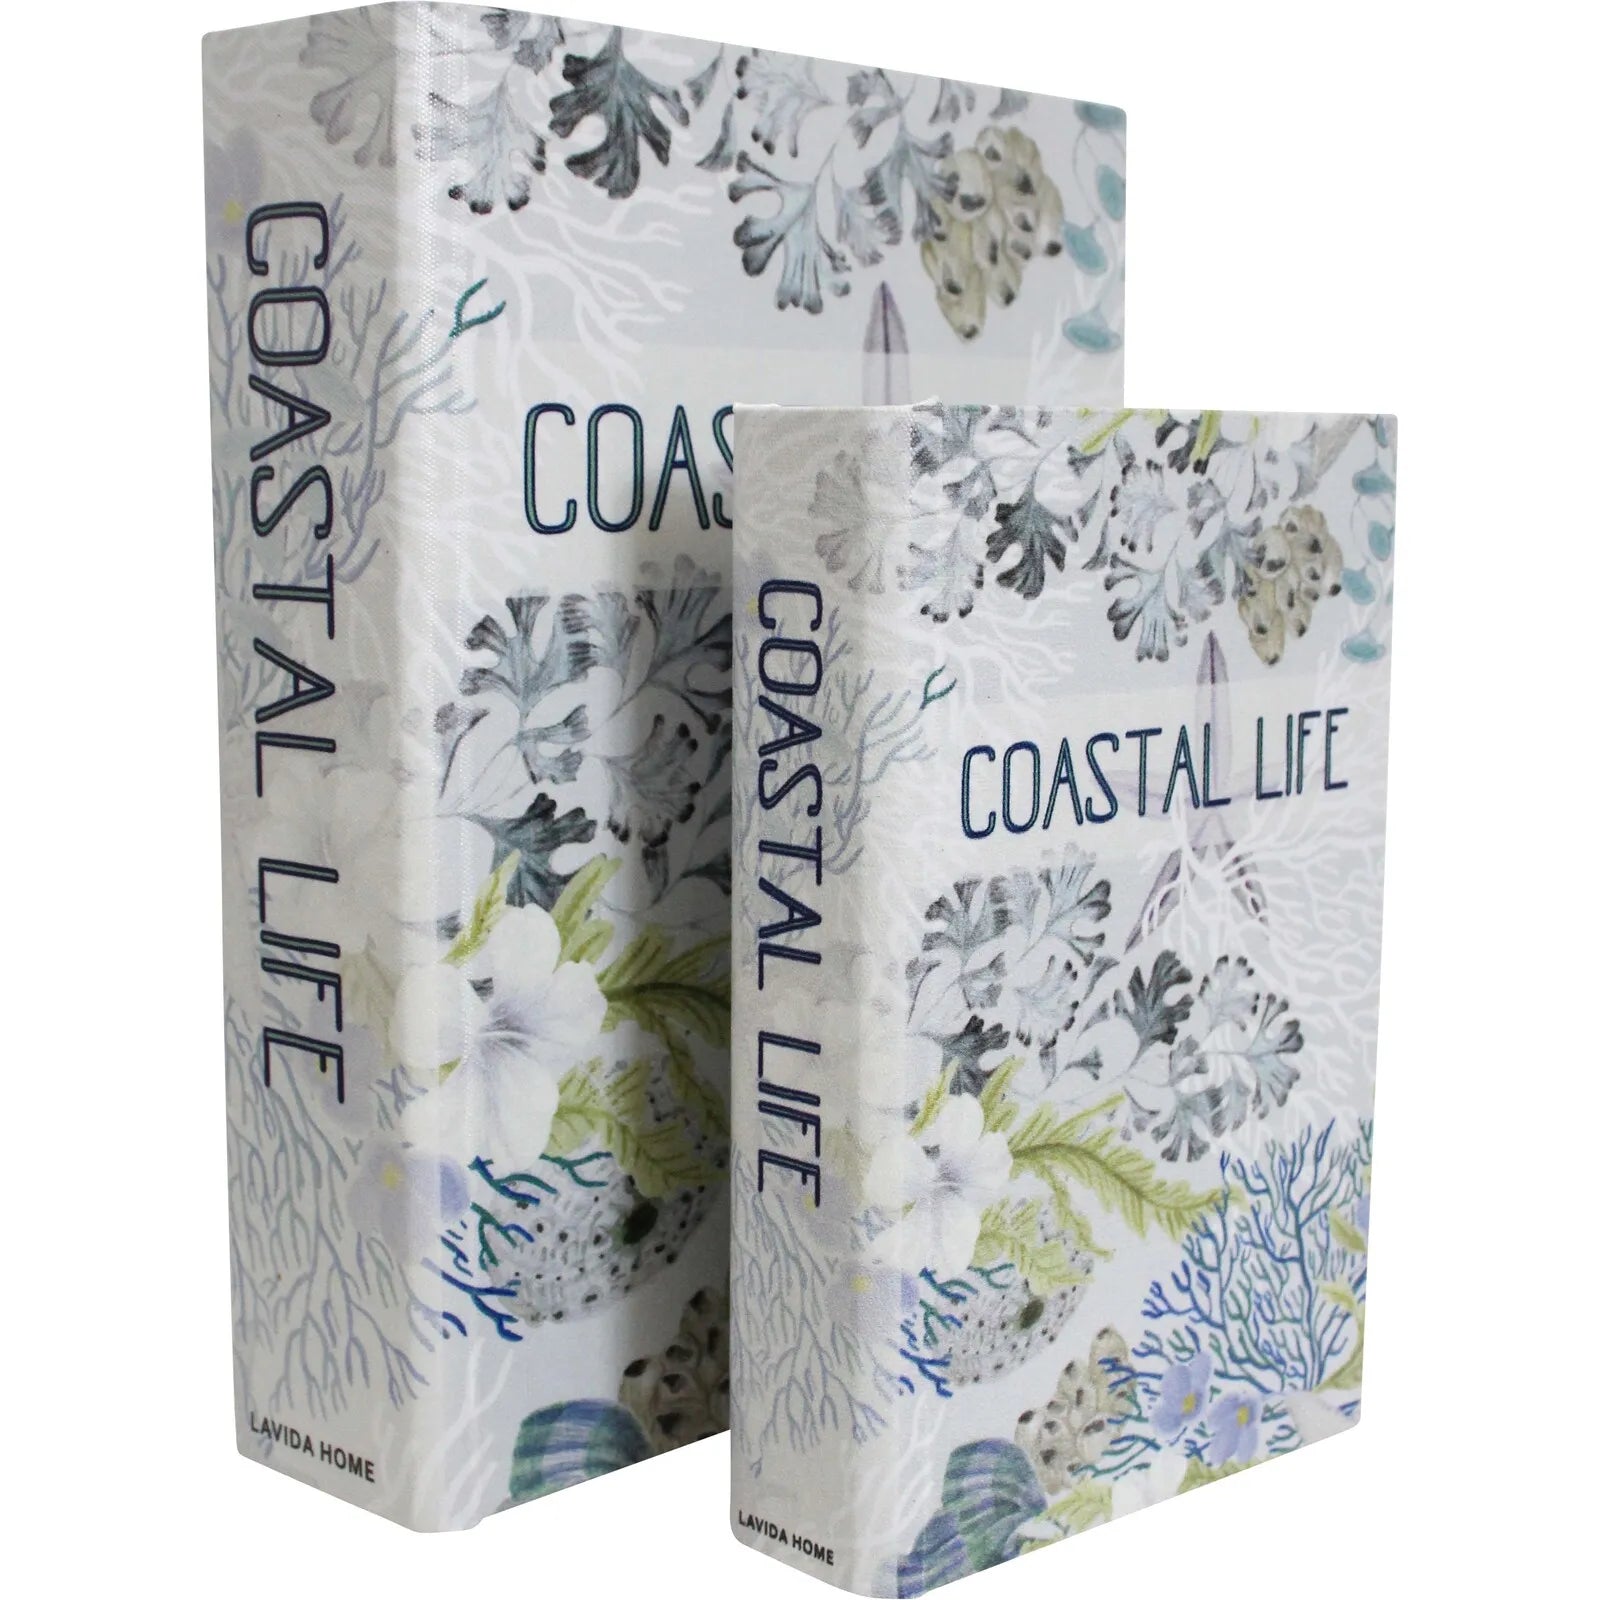 Coastal Life Book Boxes Set of 2